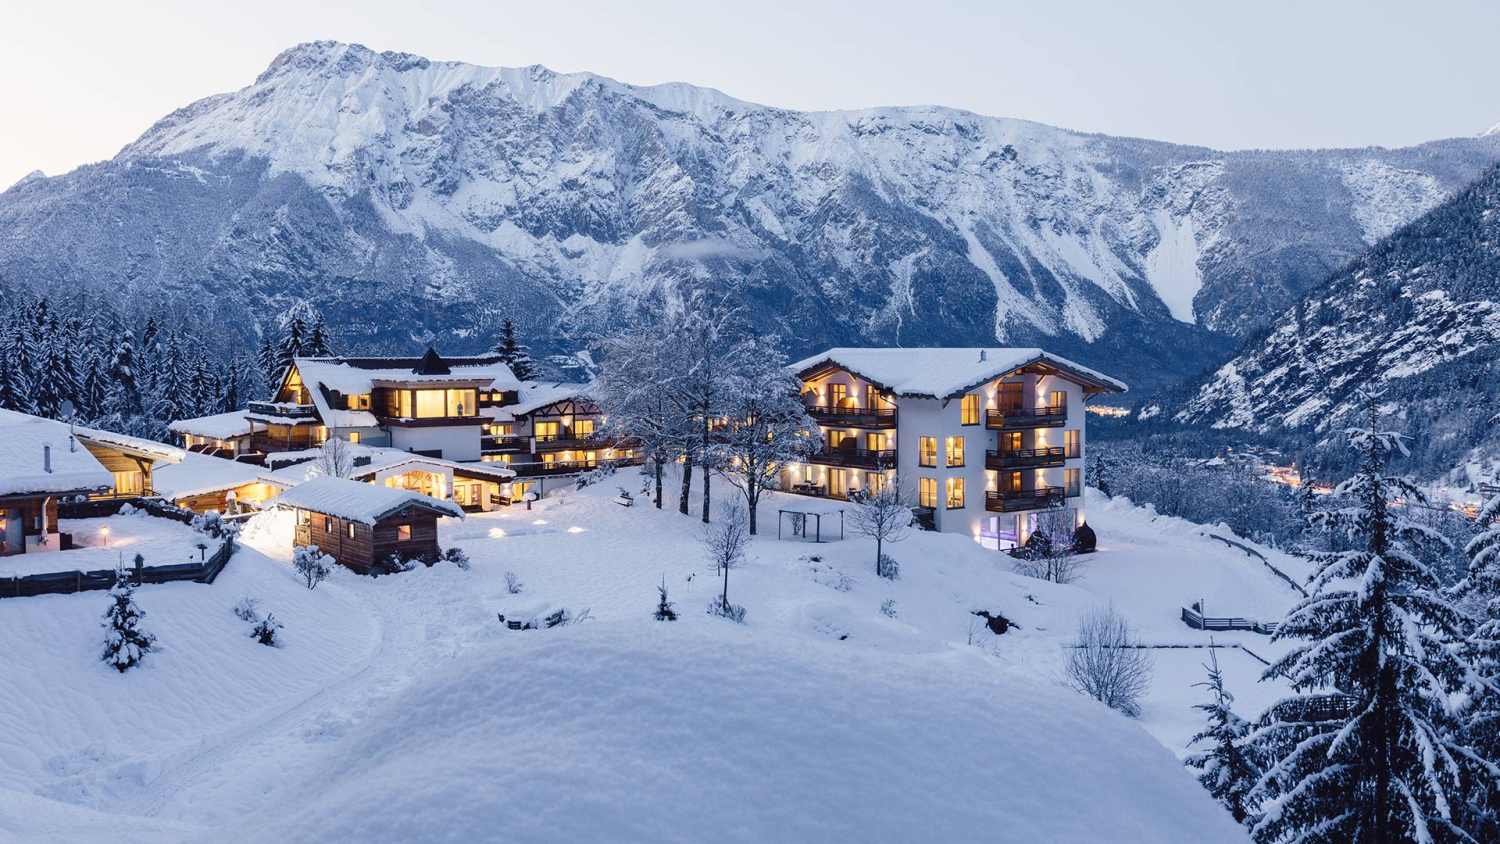 Hotel Ritzlerhof Sautens, Tyrol - Austria